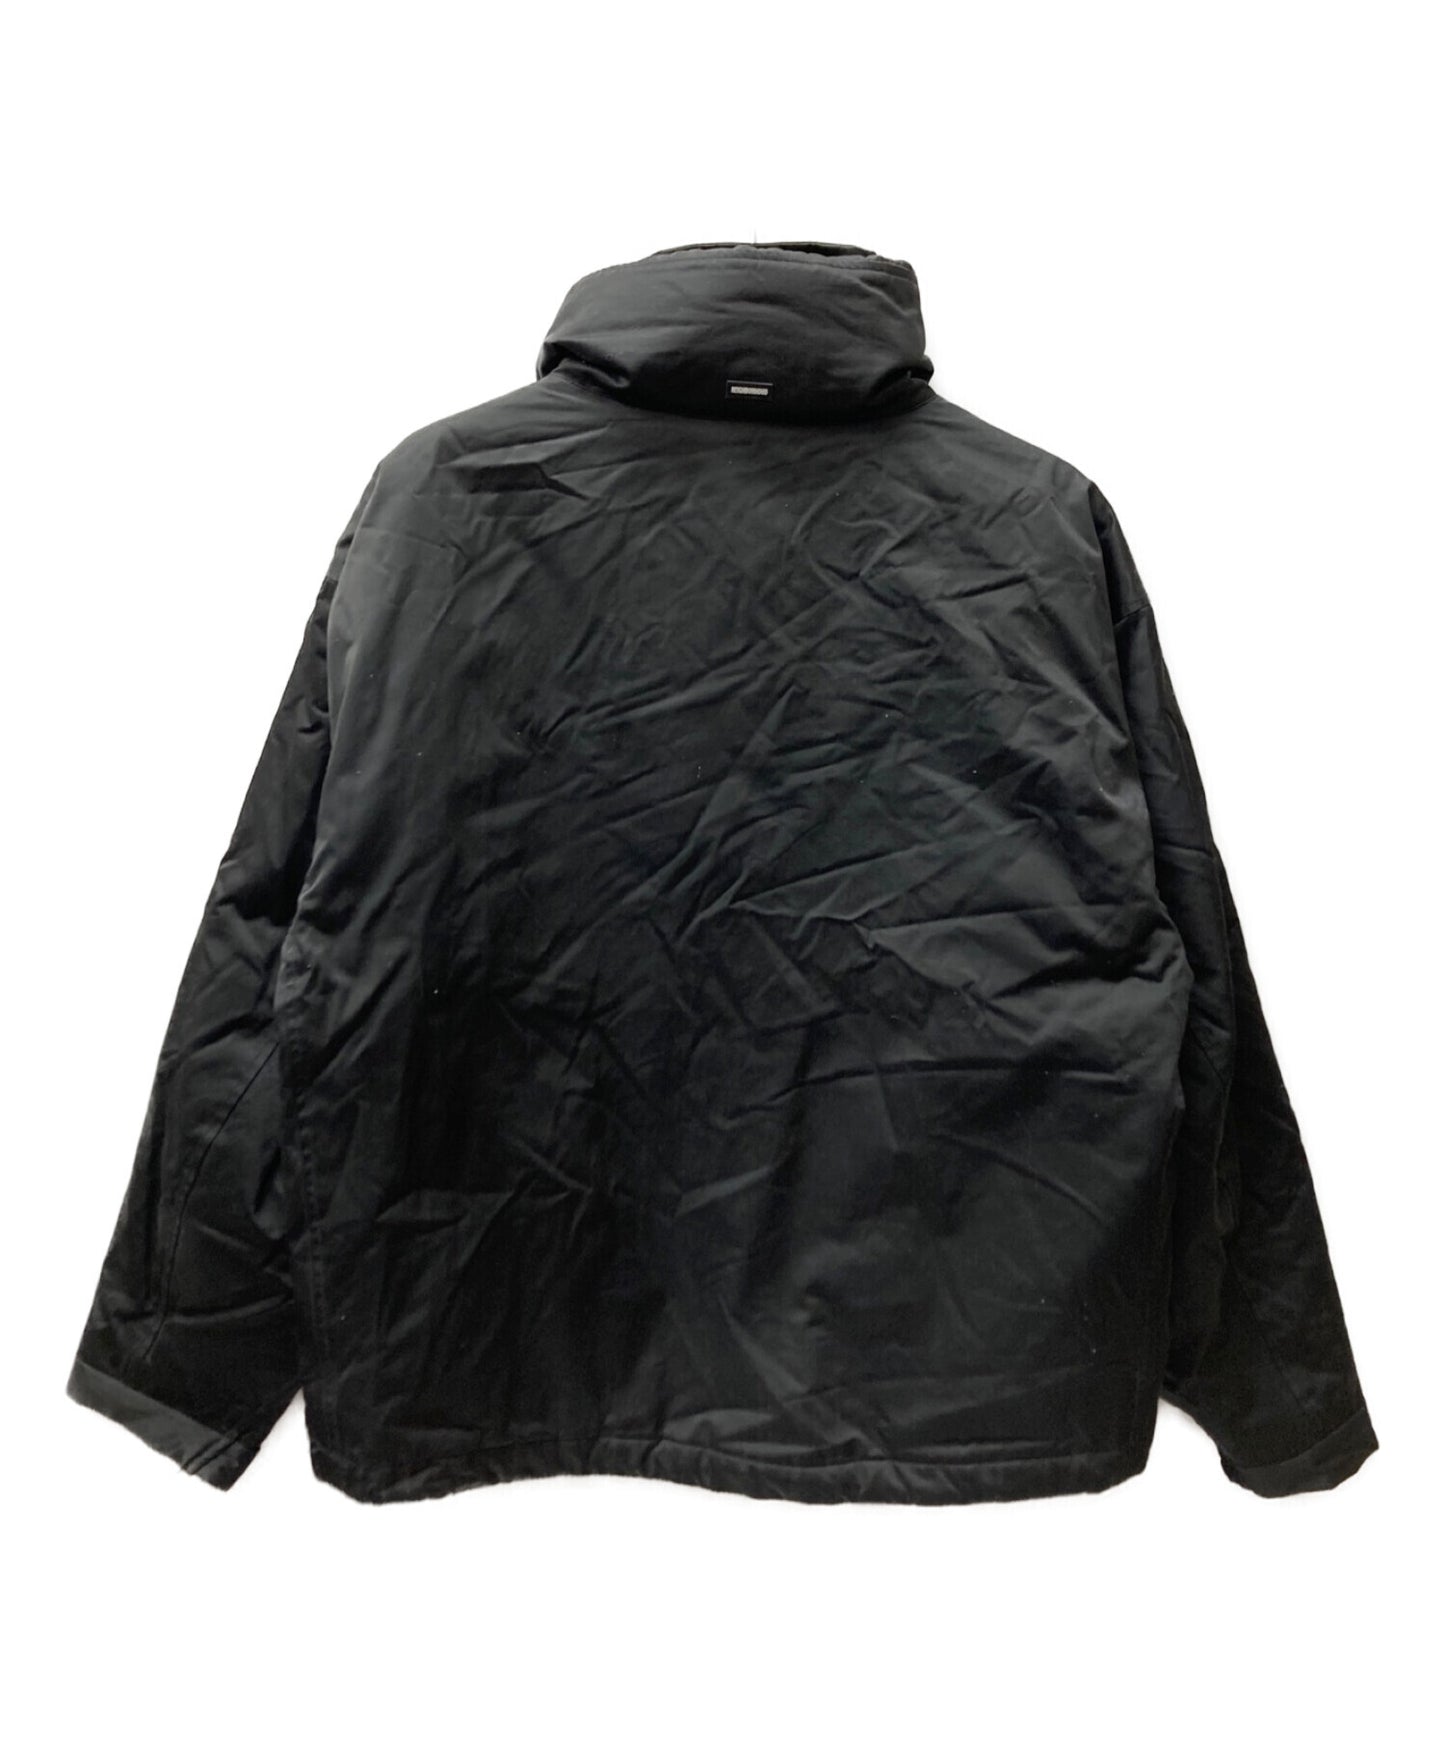 [Pre-owned] NEIGHBORHOOD tactical jacket 202TSNH-JKM07